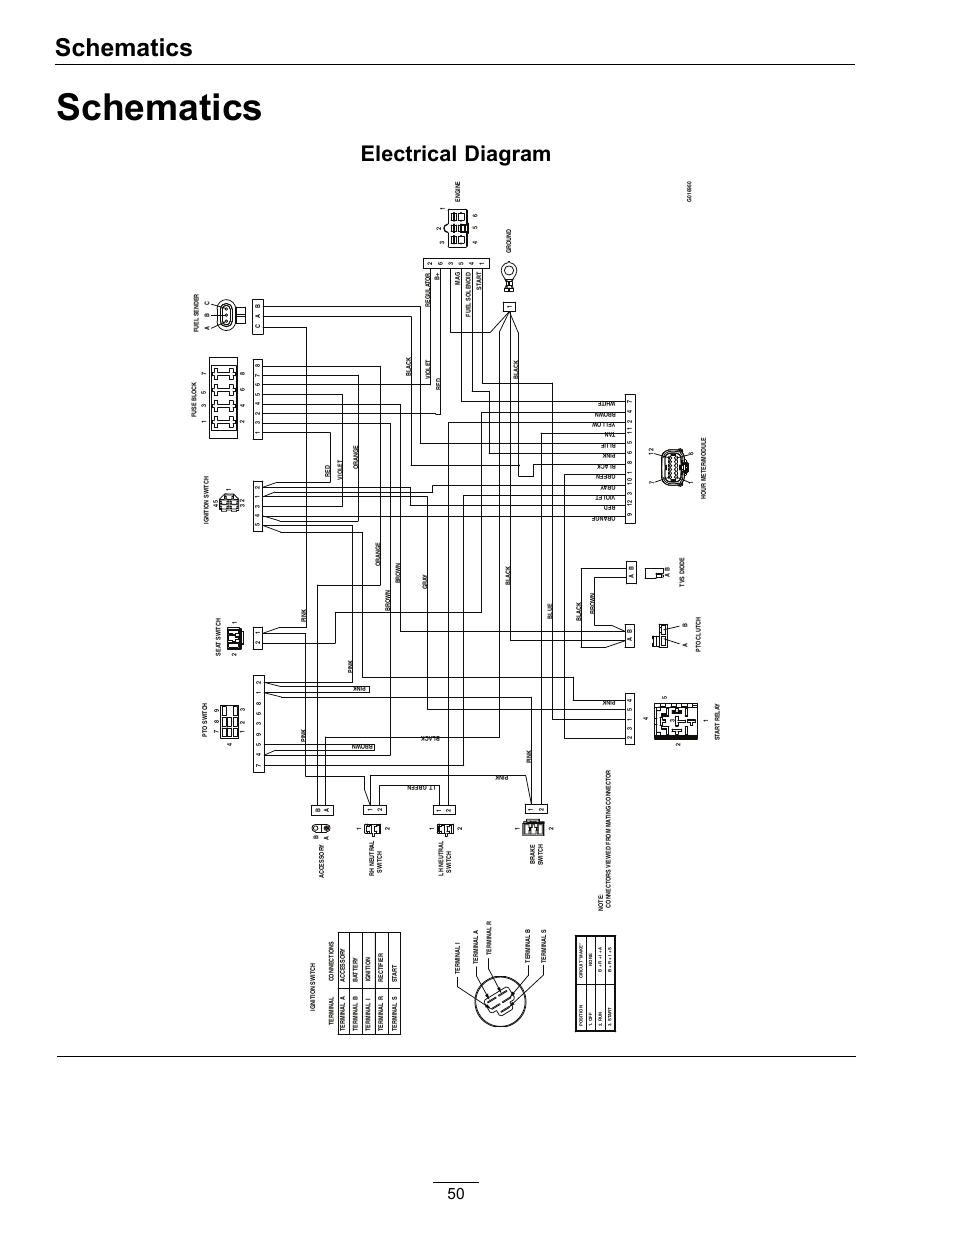 220 volt baseboard heater wiring diagram